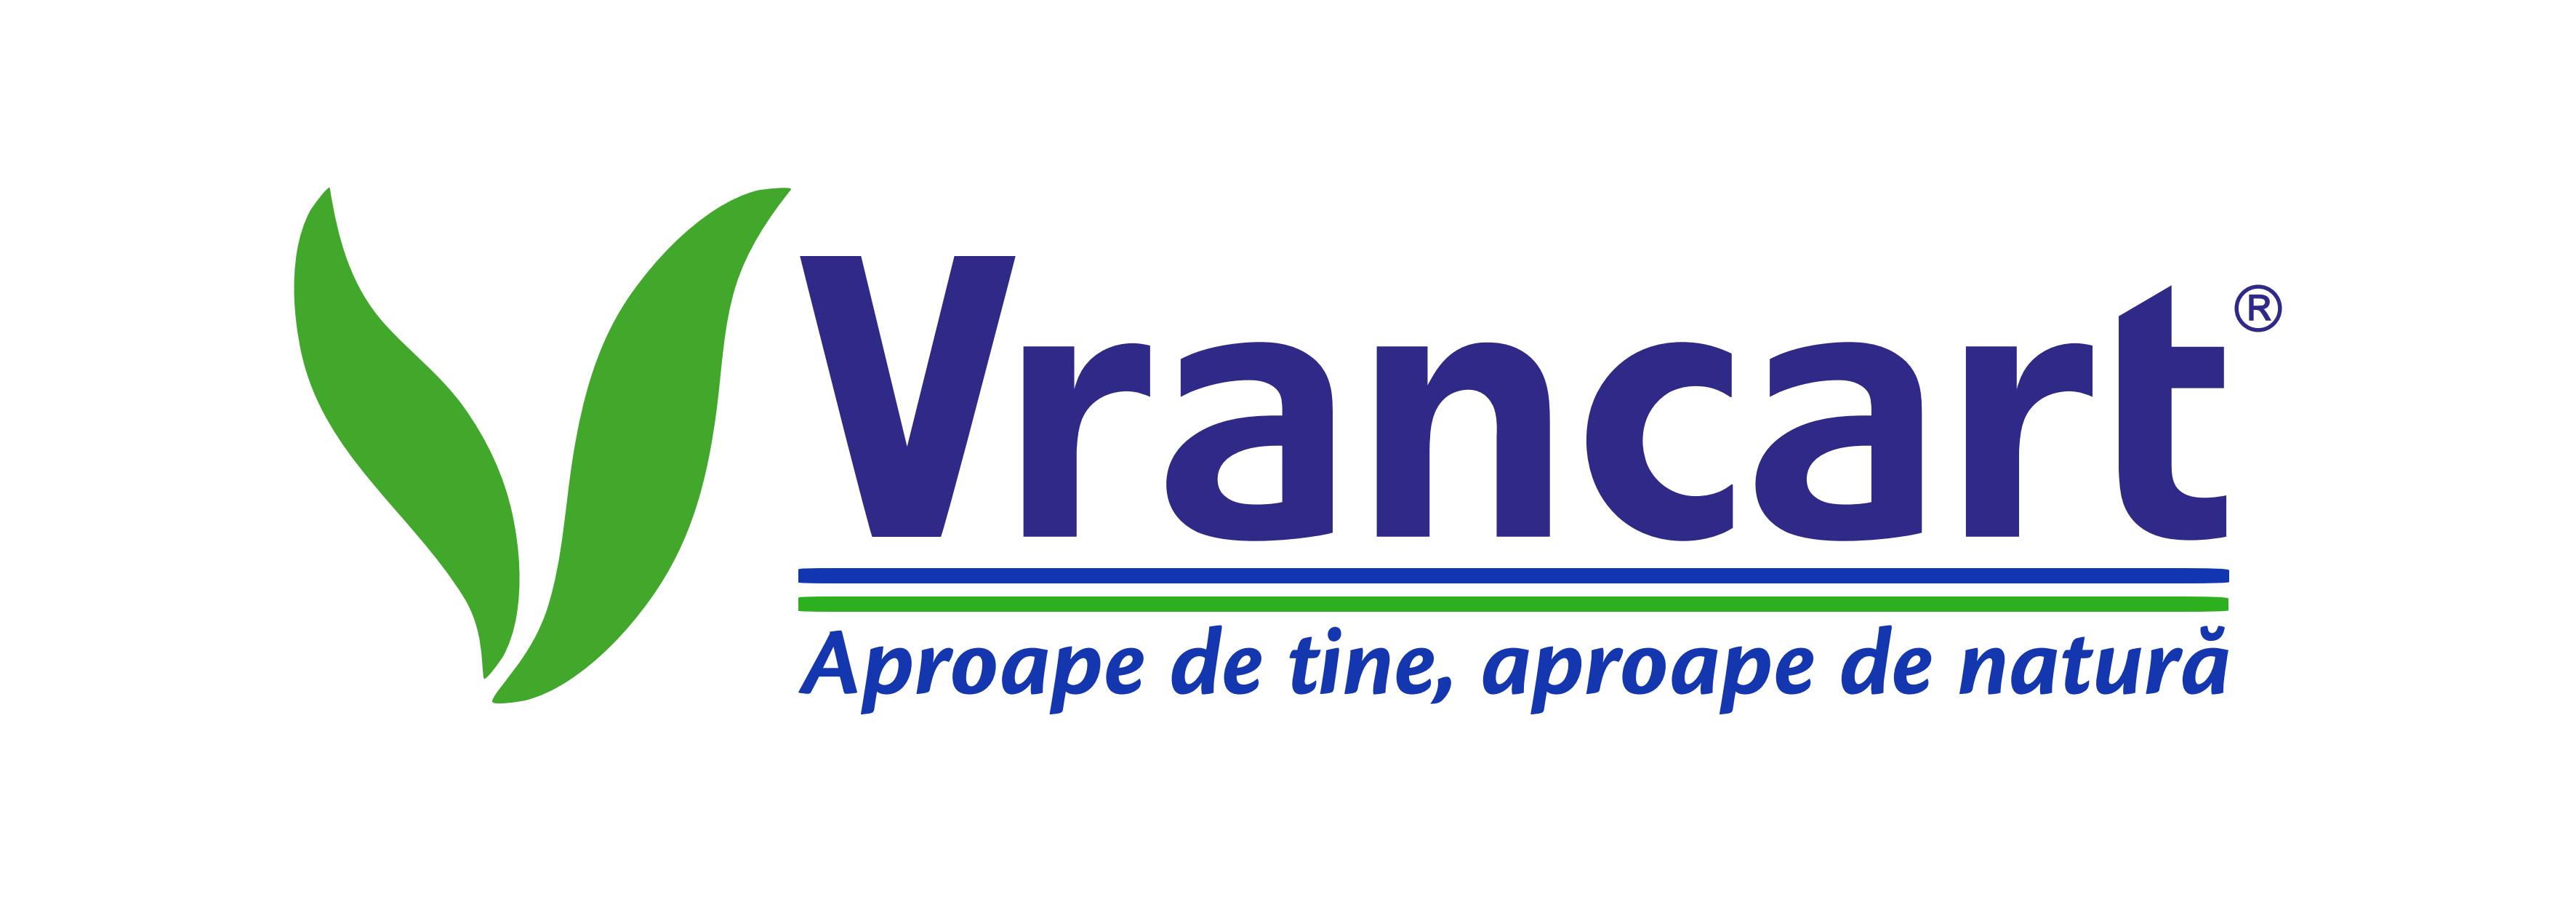 logo vrancart vectorial 1